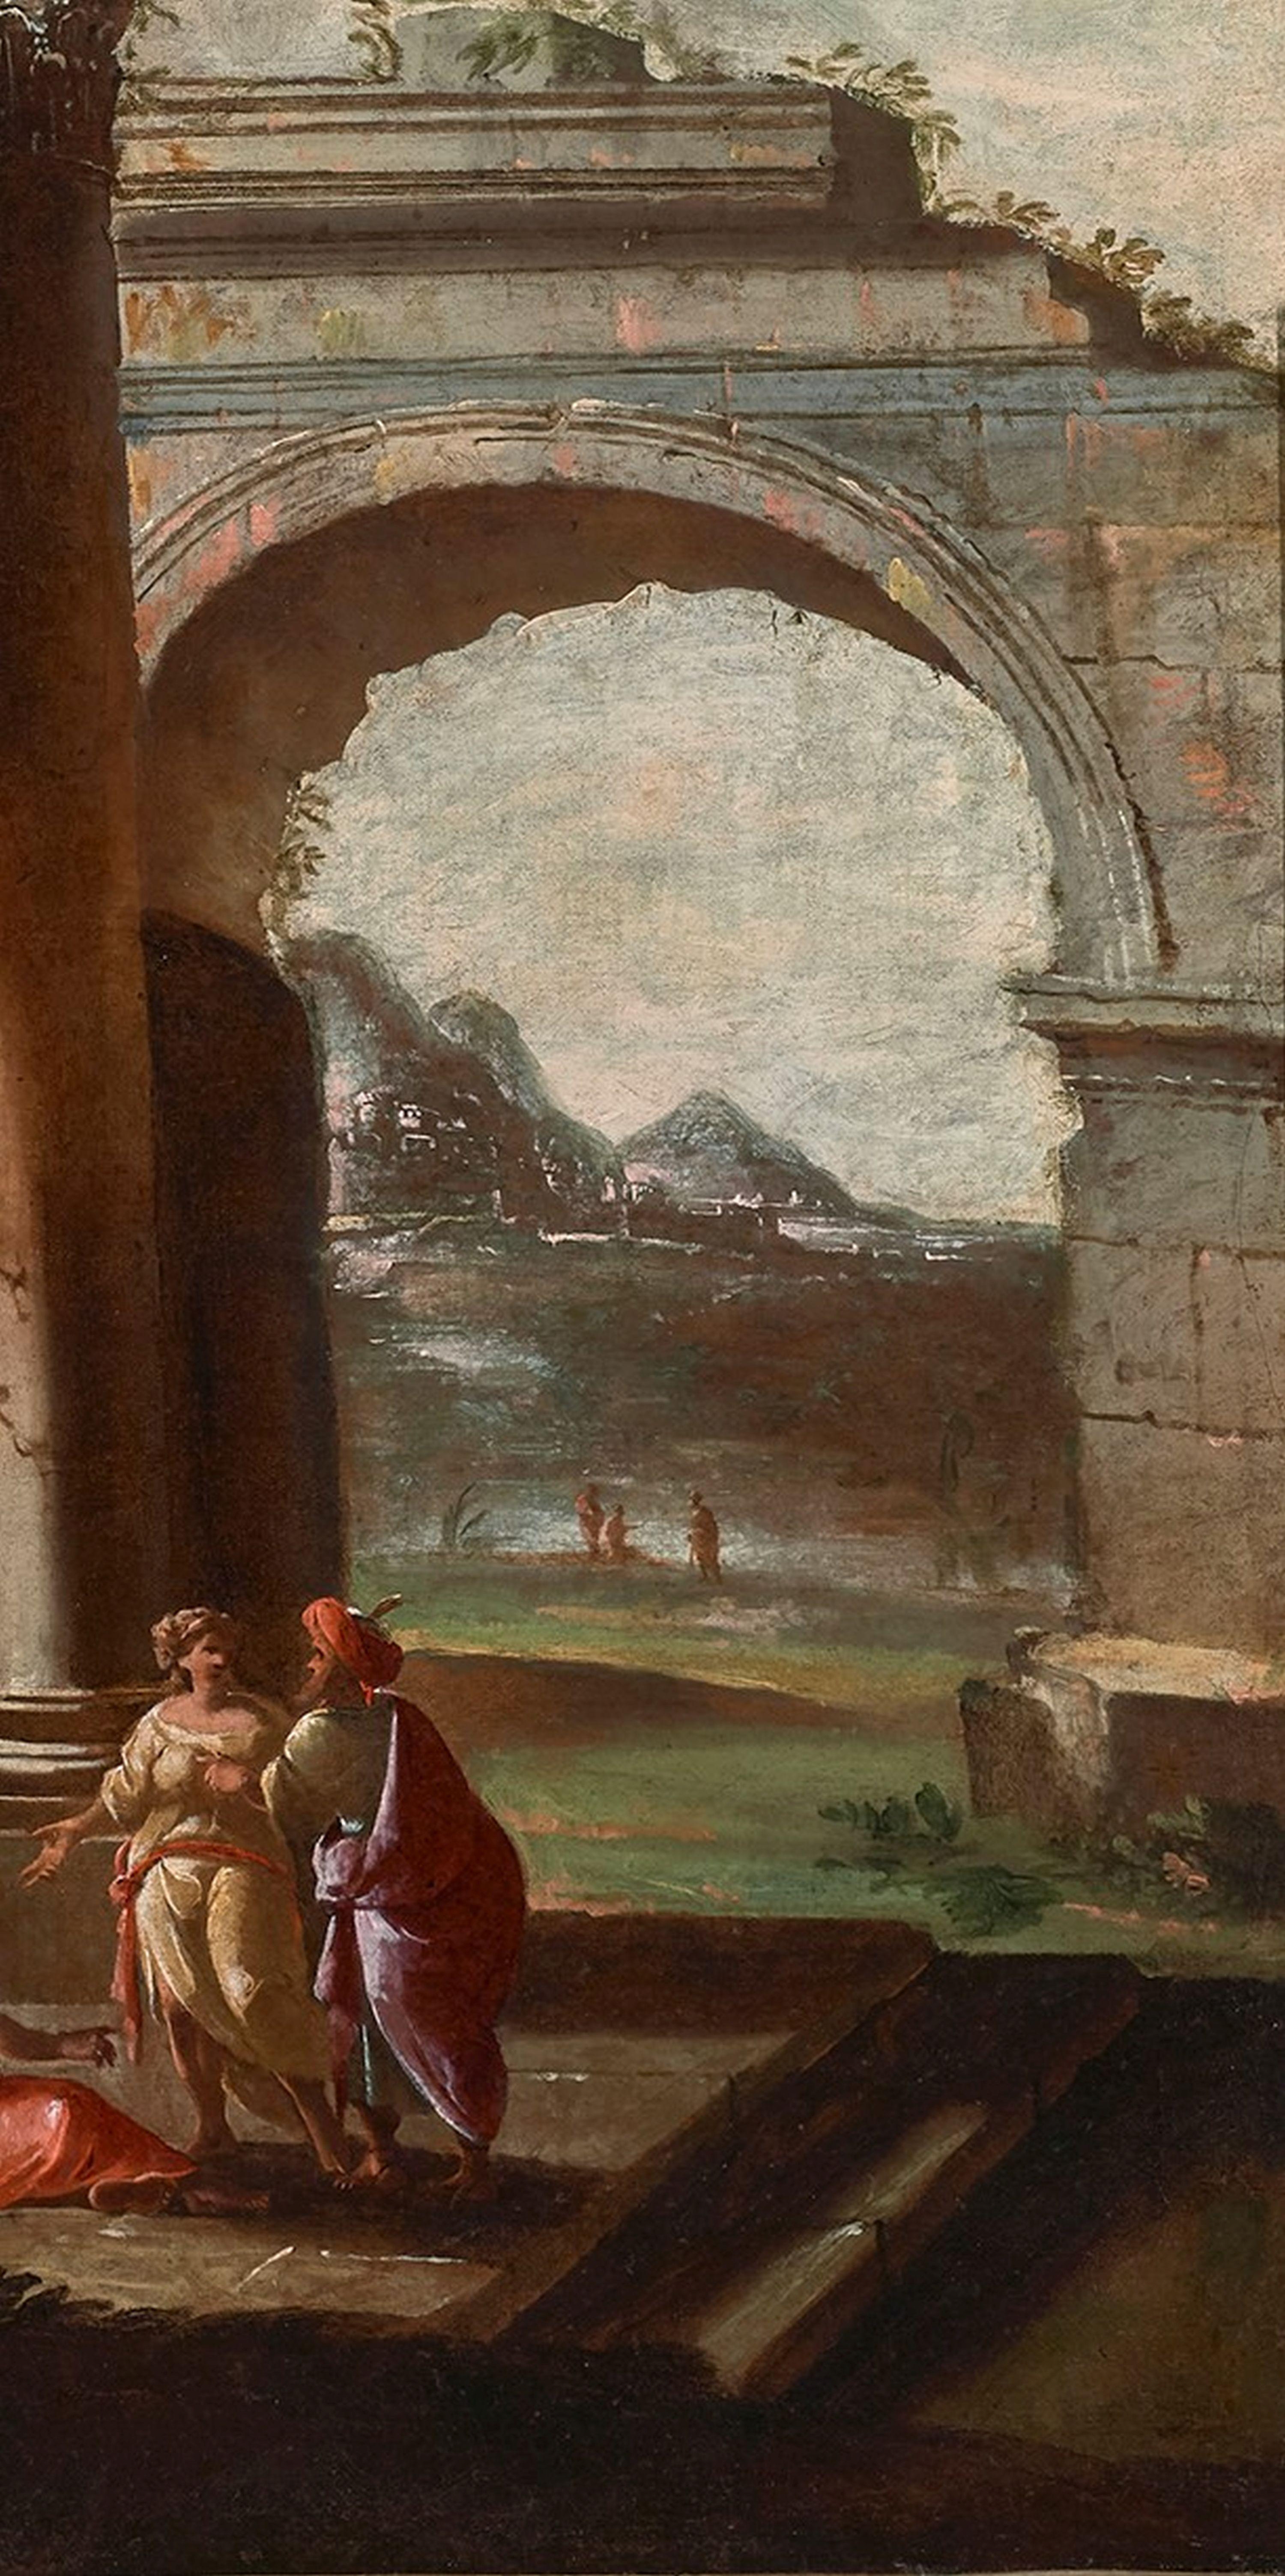 Oiled Capriccio, Carlieri 18th Century Oil on Canvas Architectural Capriccio Painting